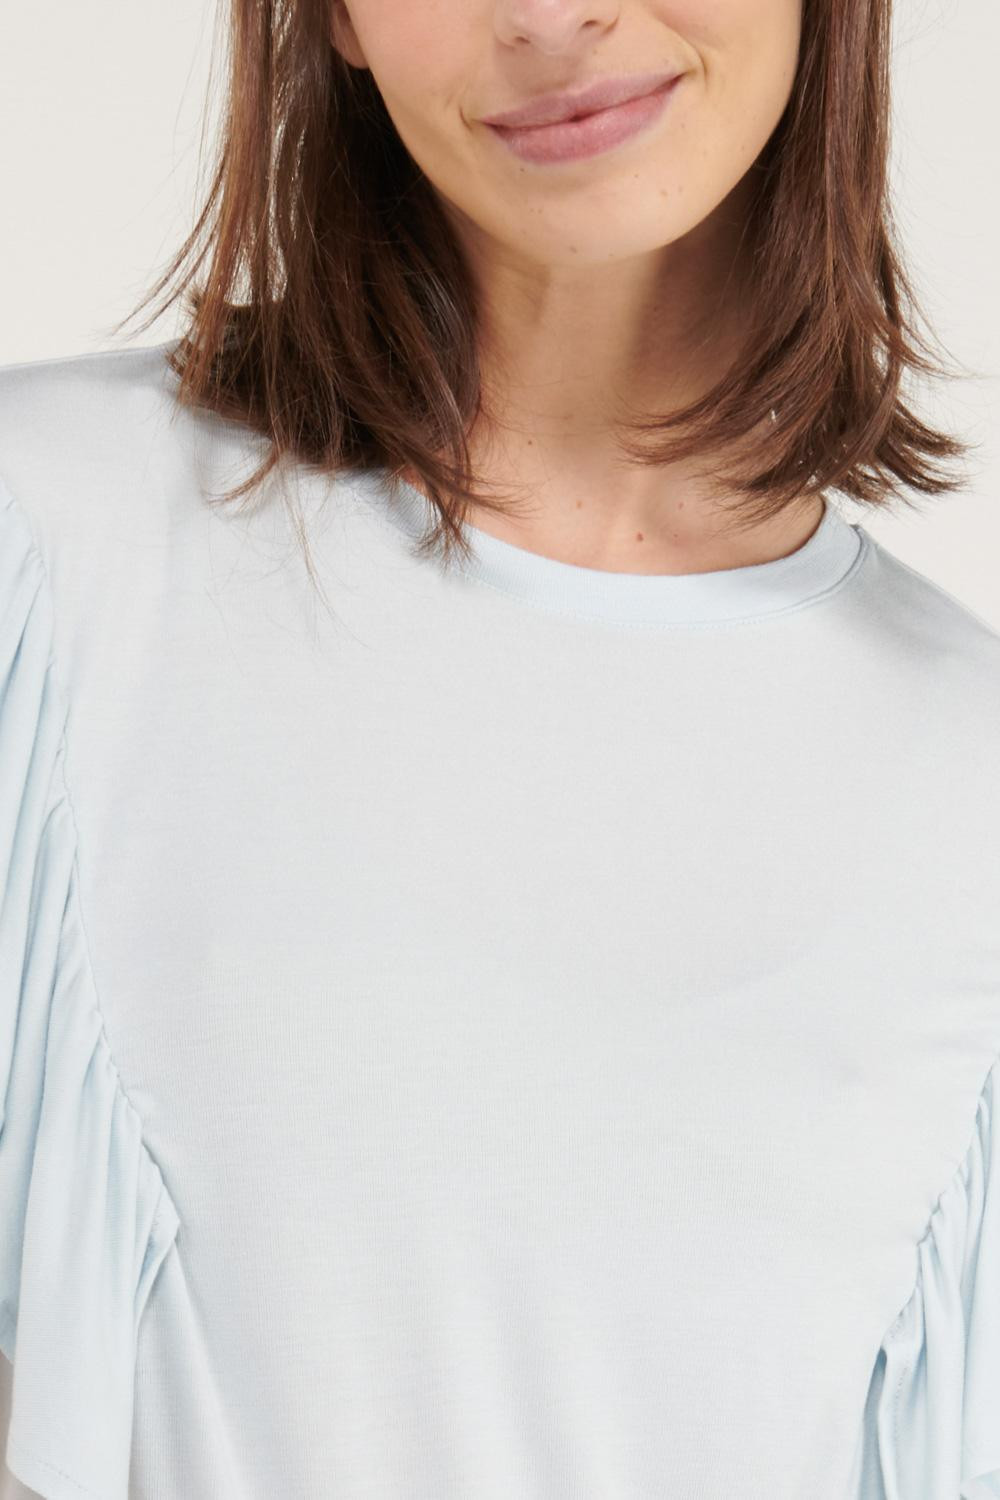 Camiseta azul clara manga corta con detalles de boleros